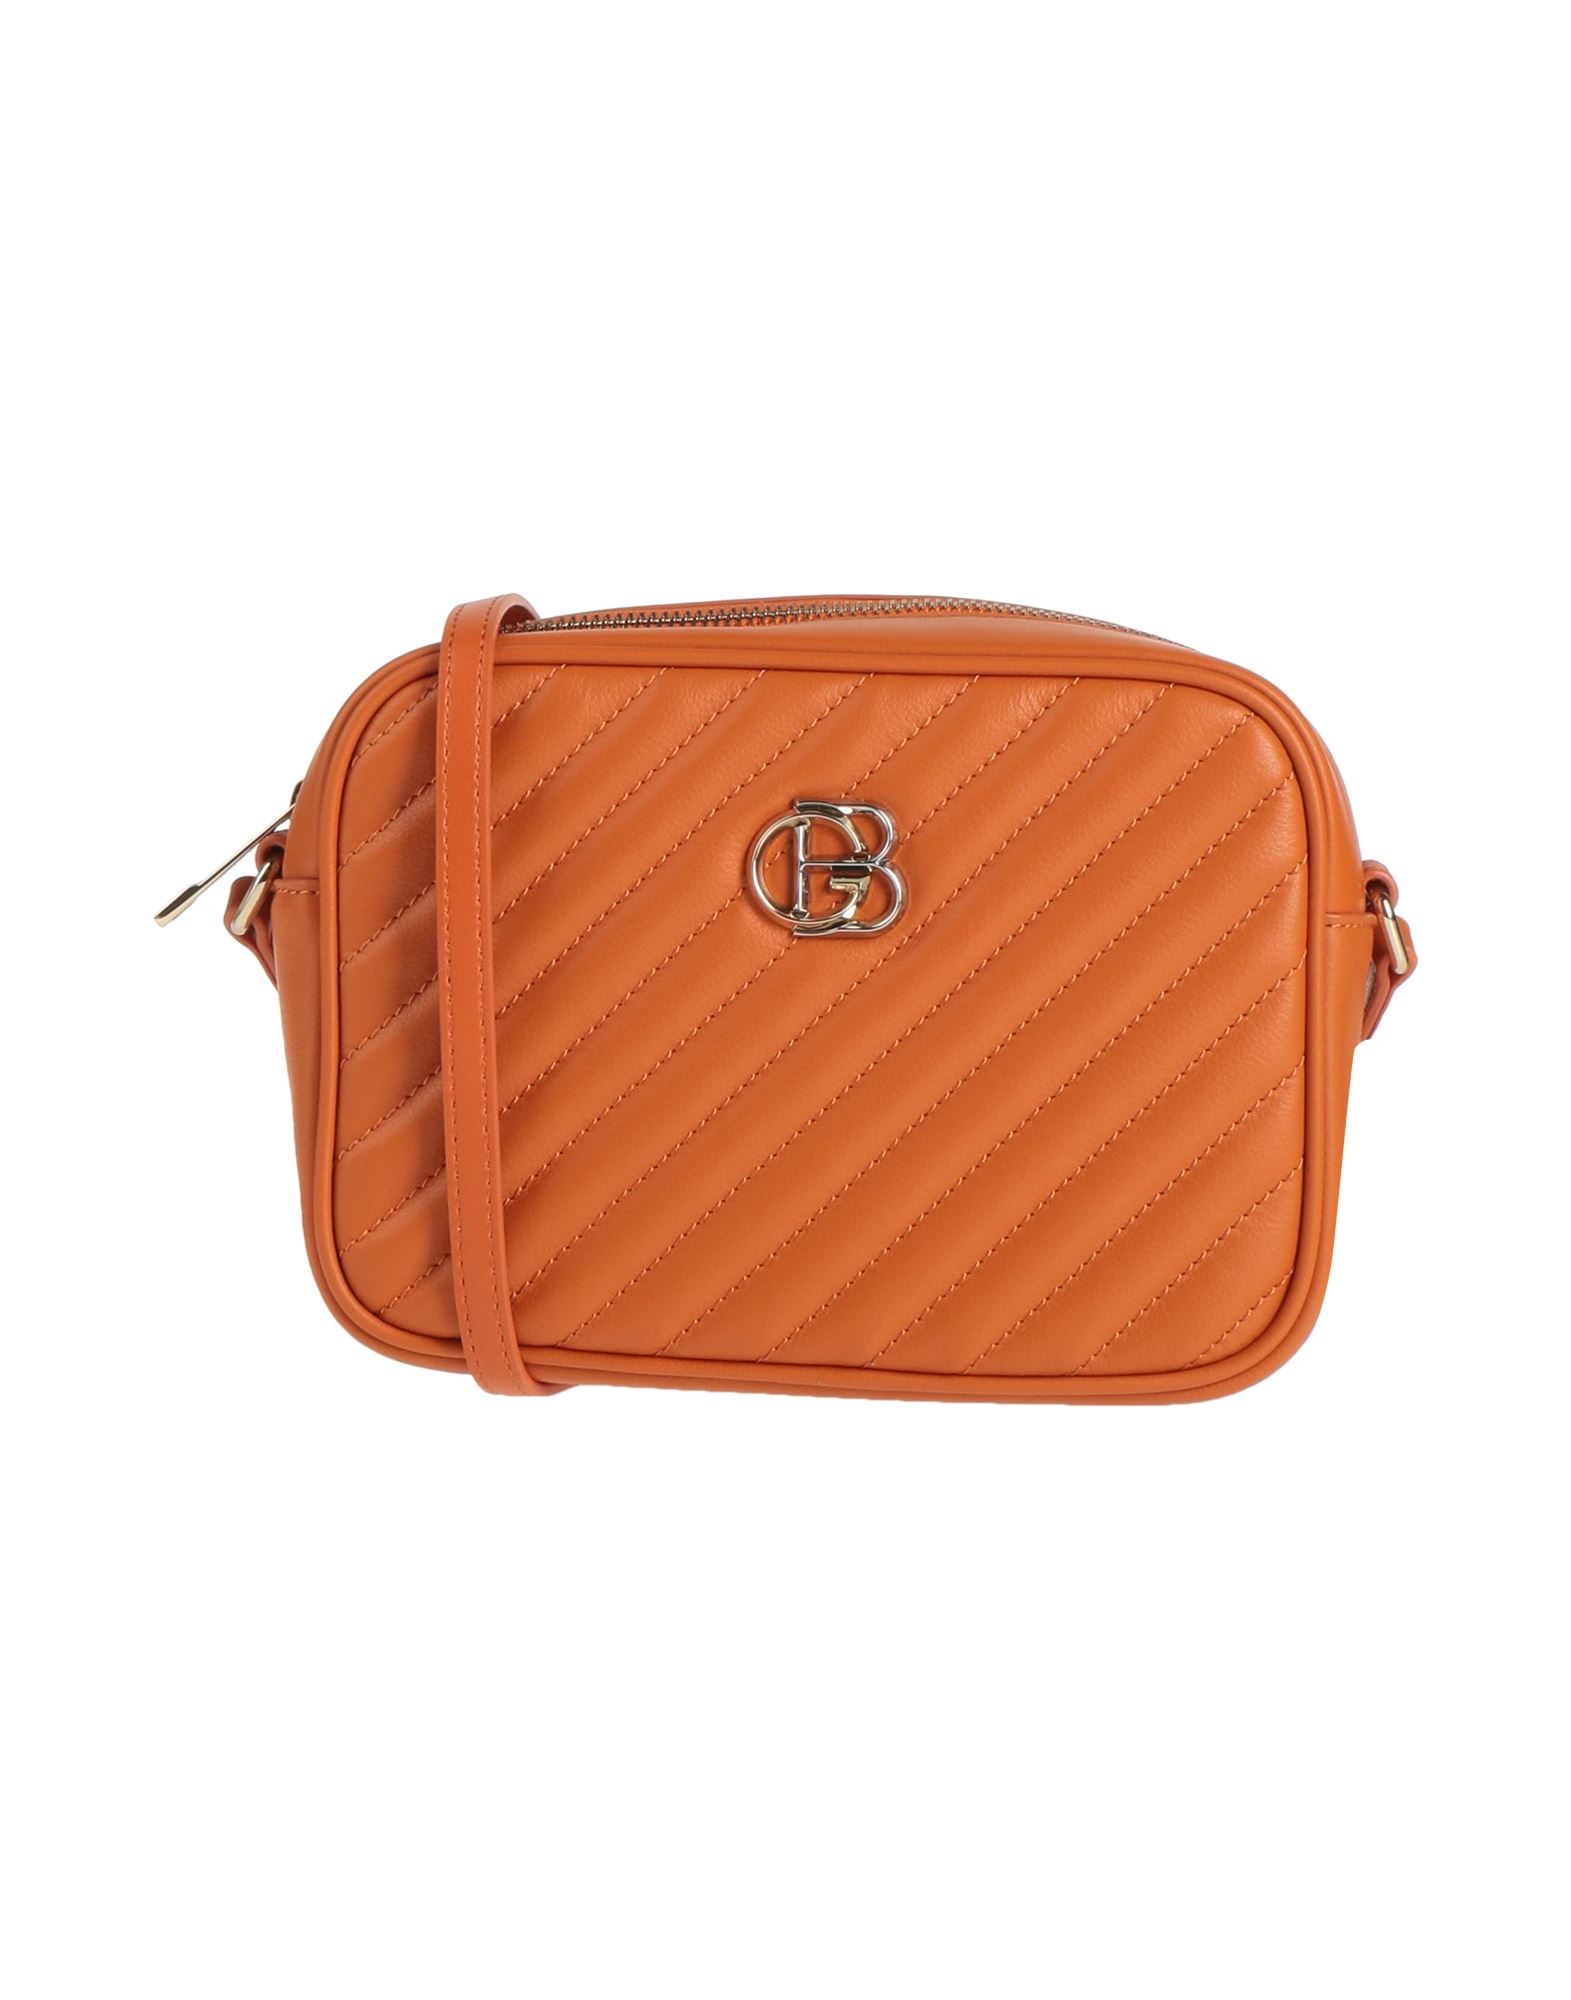 Baldinini Handbags In Orange